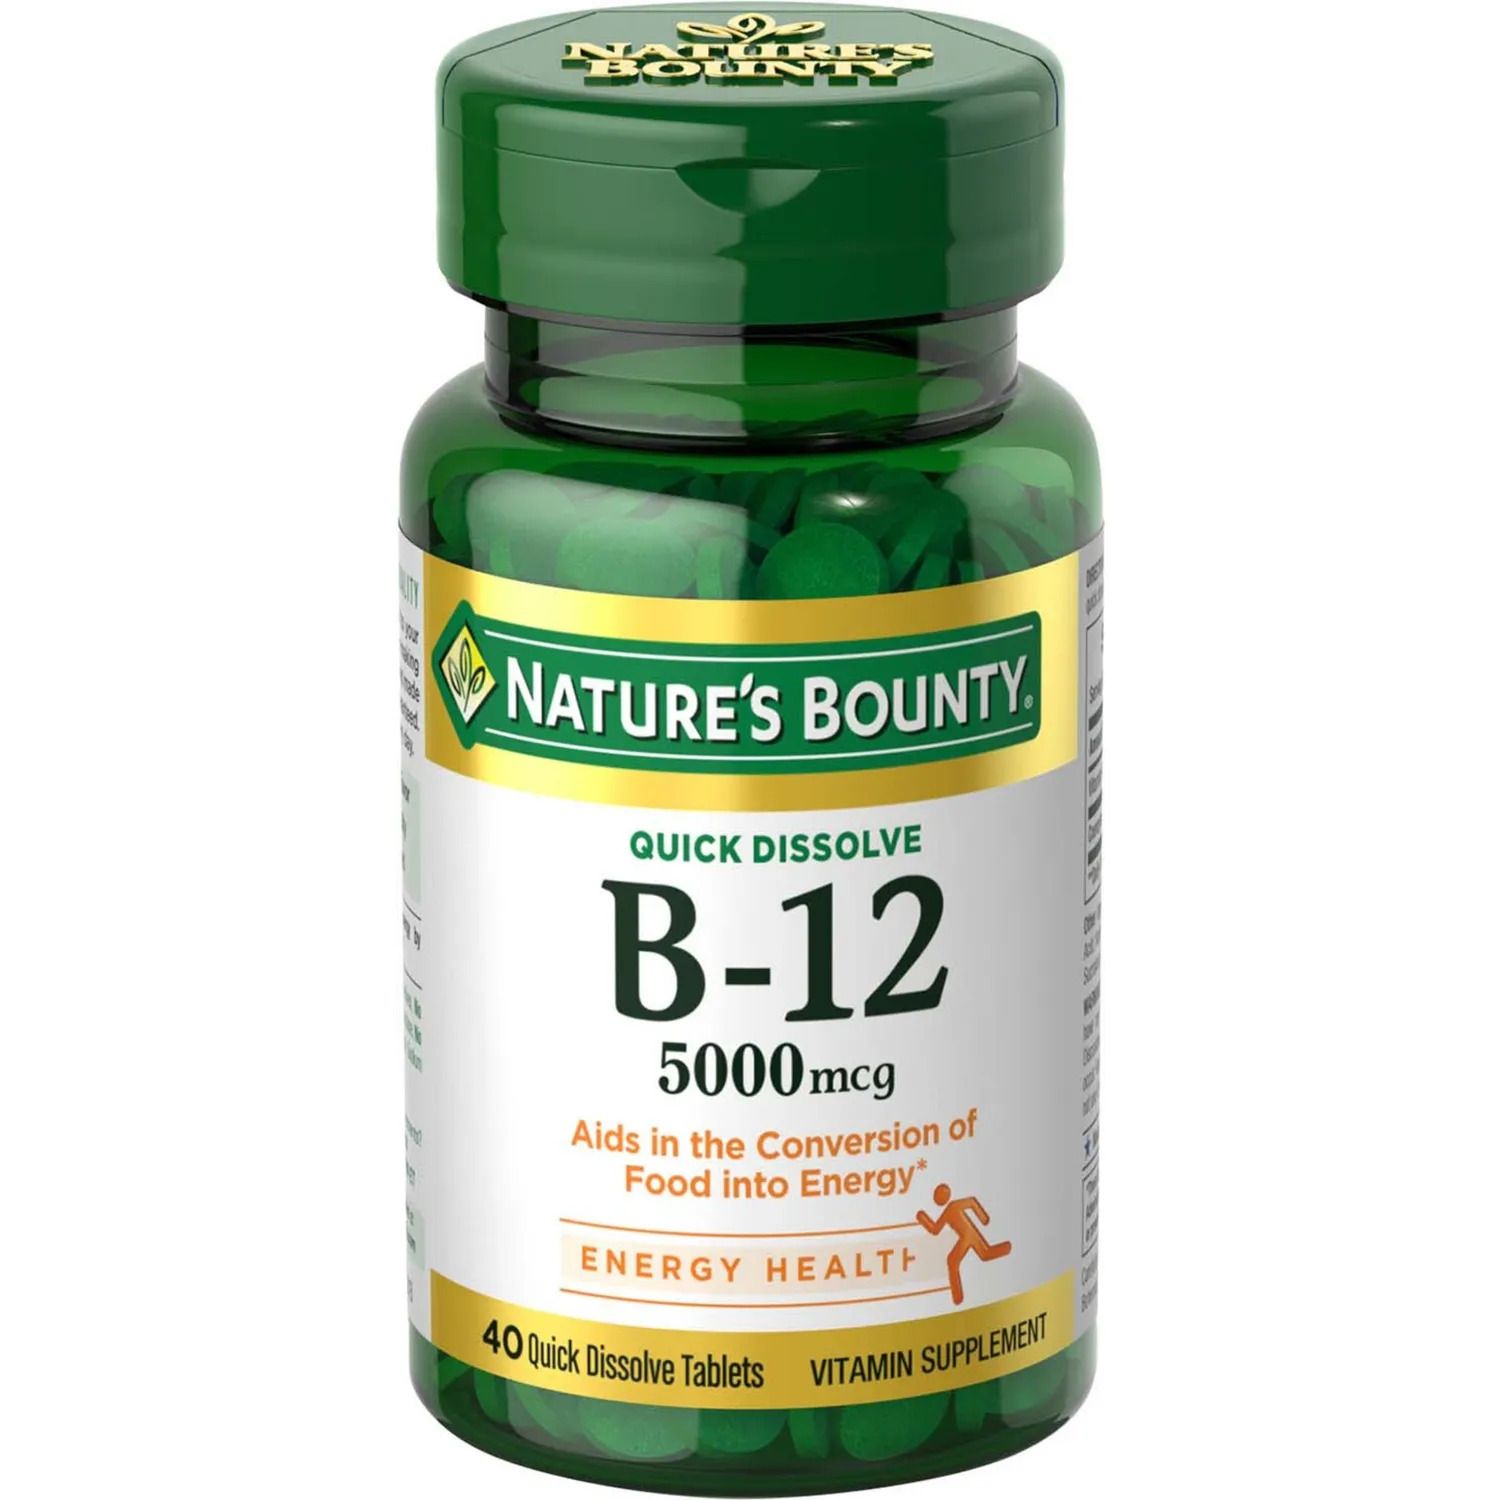 Nature's Bounty Vitamin B-12 5000 mcg Quick Dissolve Tablets - 40 ct